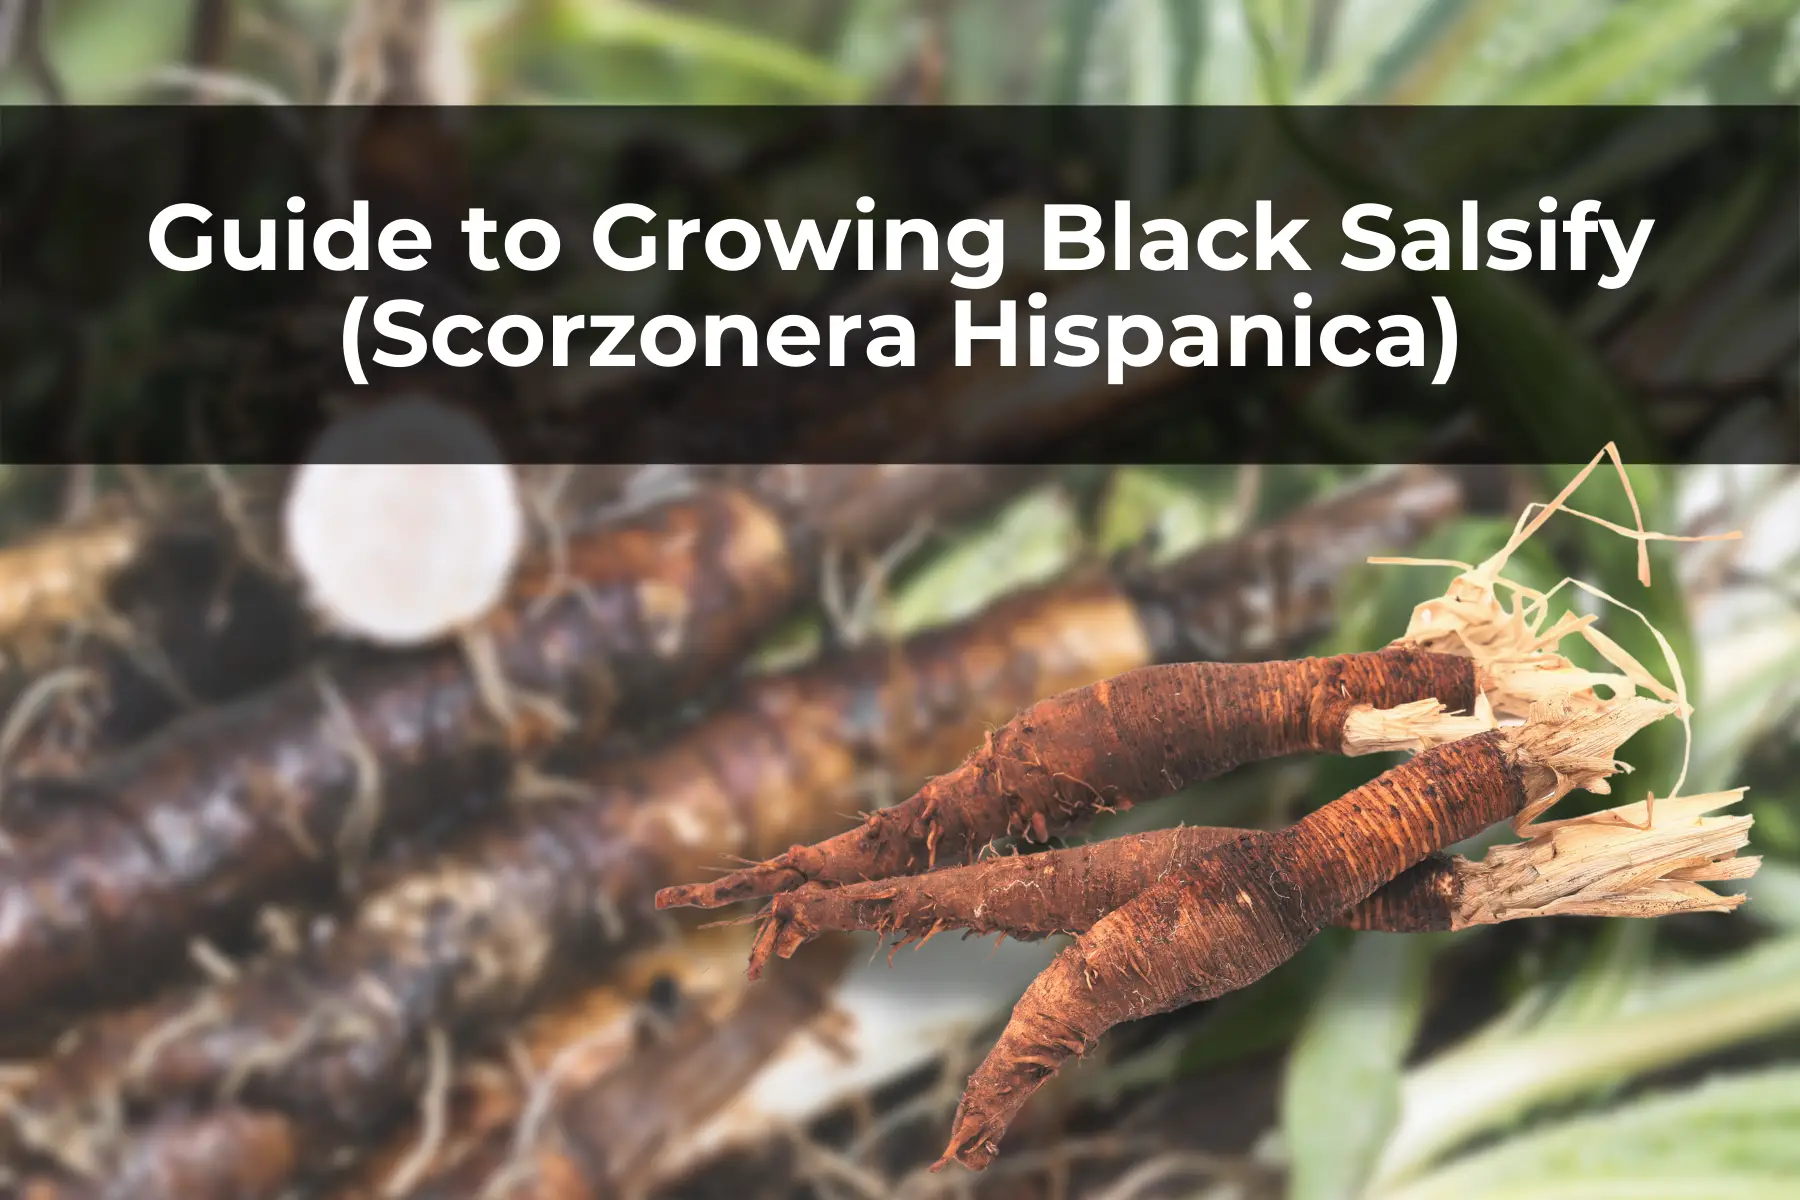 Guide to Growing Black Salsify (Scorzonera Hispanica)